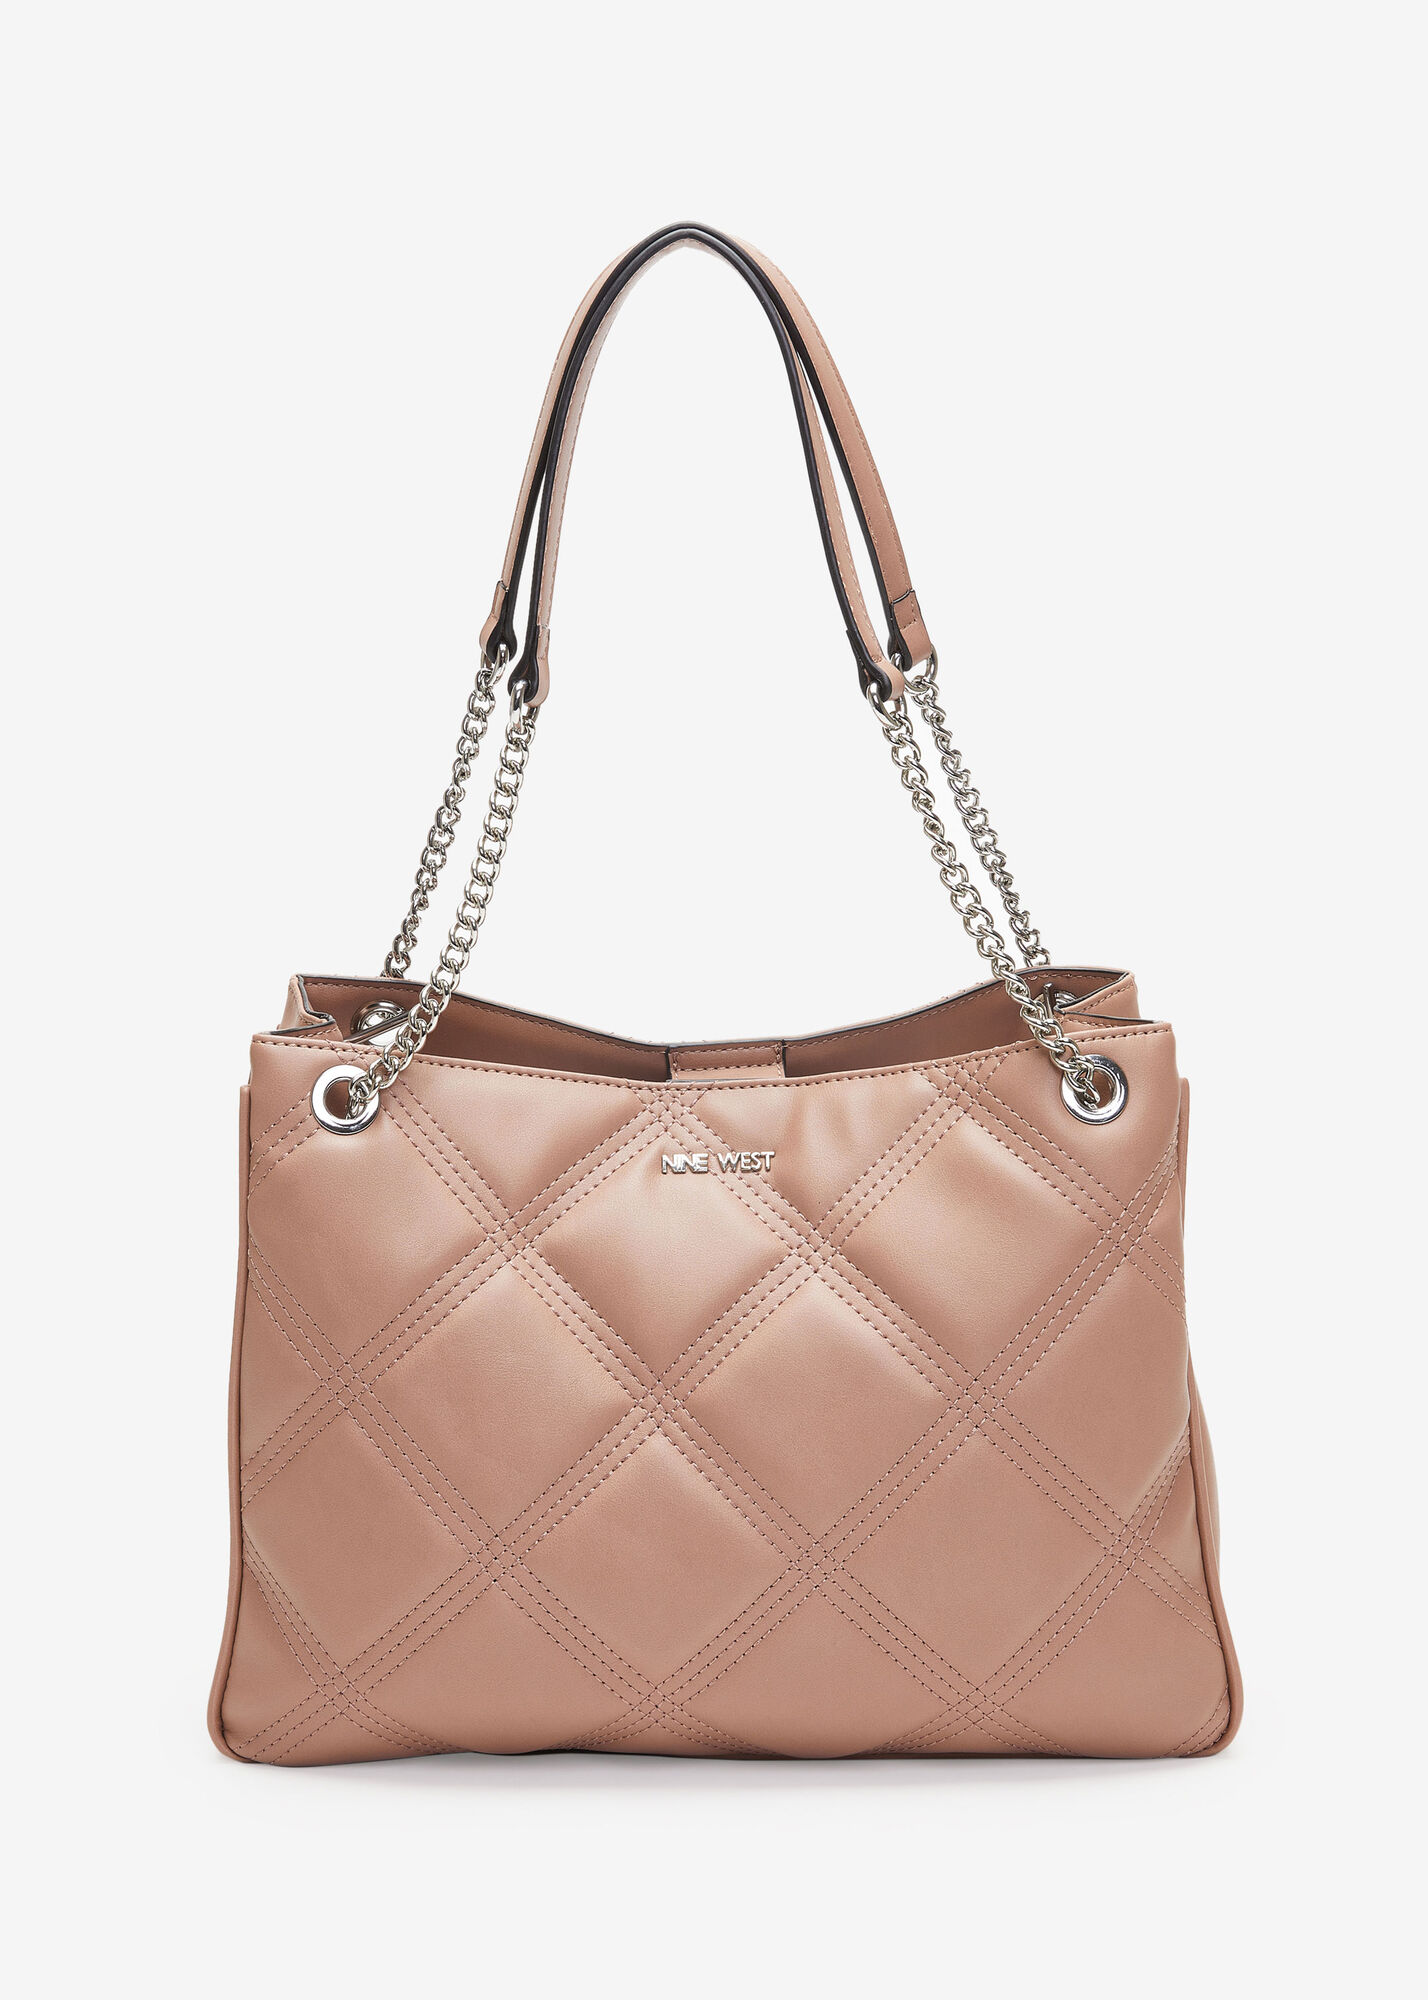 BURLINGTON Handbags FOR WOMEN'S Purse FOR LESS burlington purses